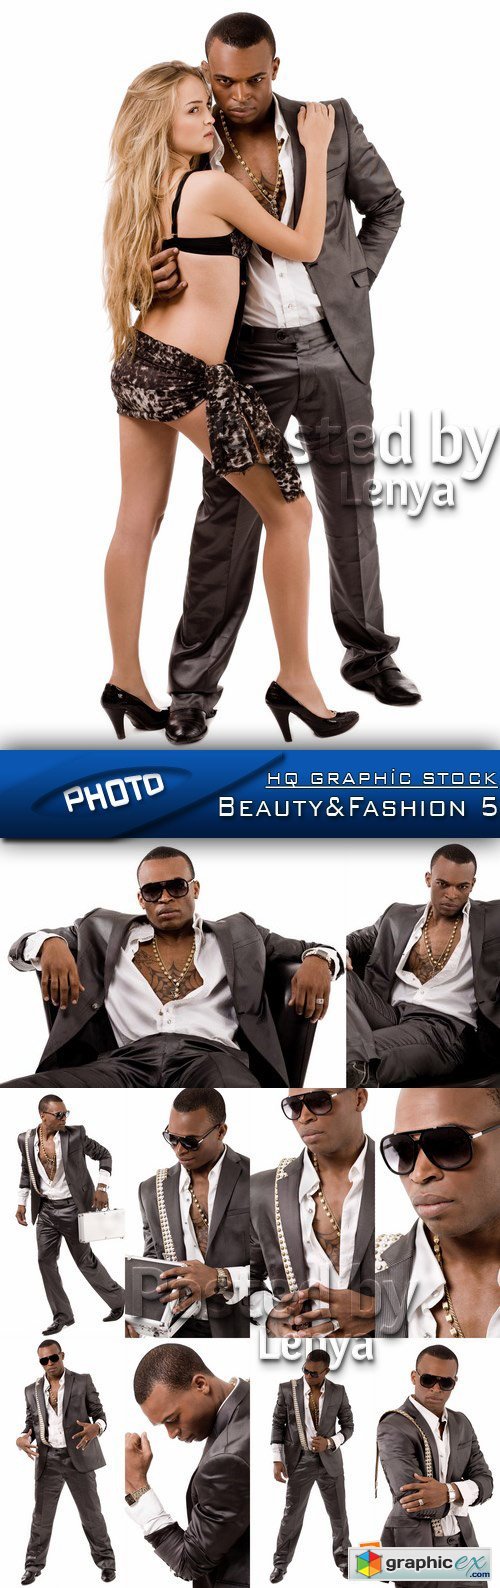 Stock Photo - Beauty&Fashion 5